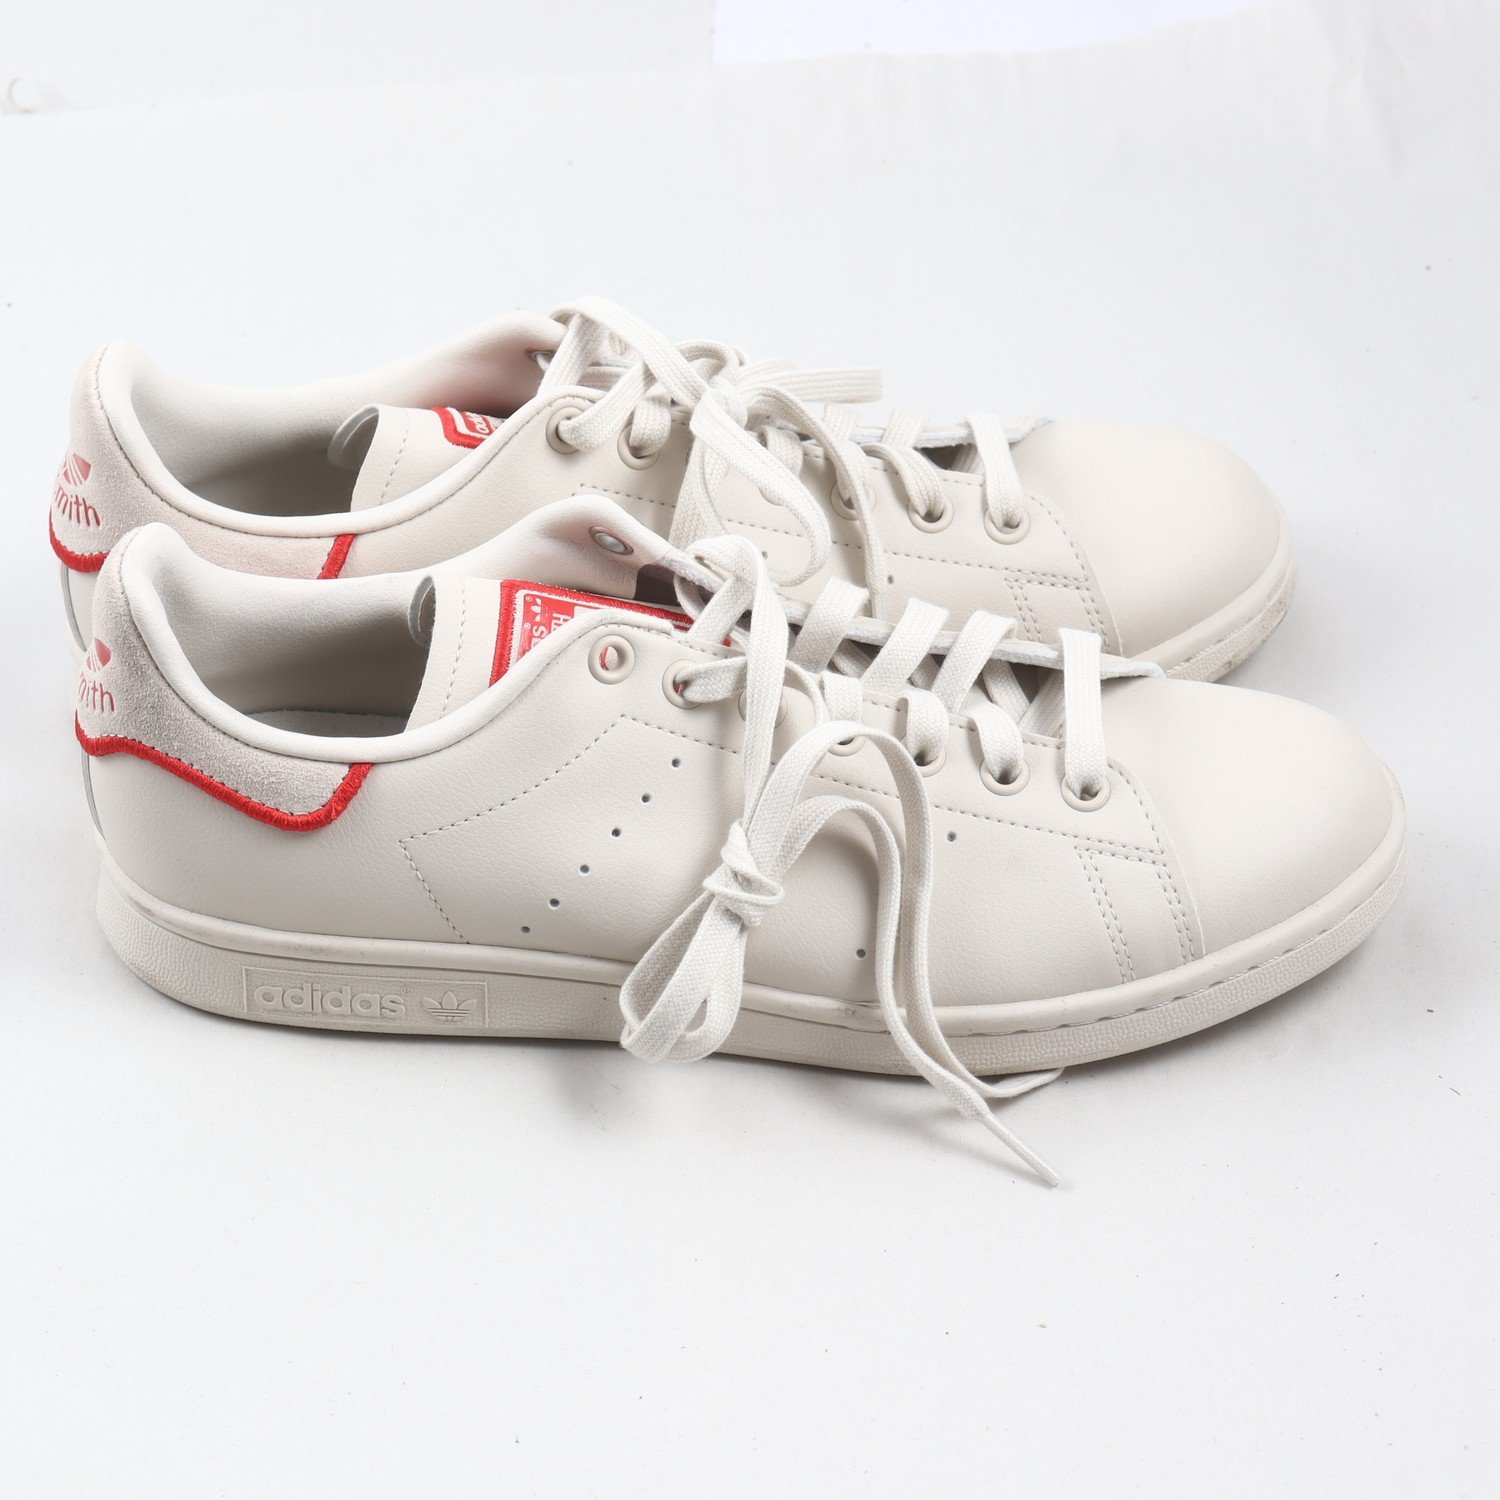 Sneakers, Adidas Stan Smith, stl. 42 (UK 8)